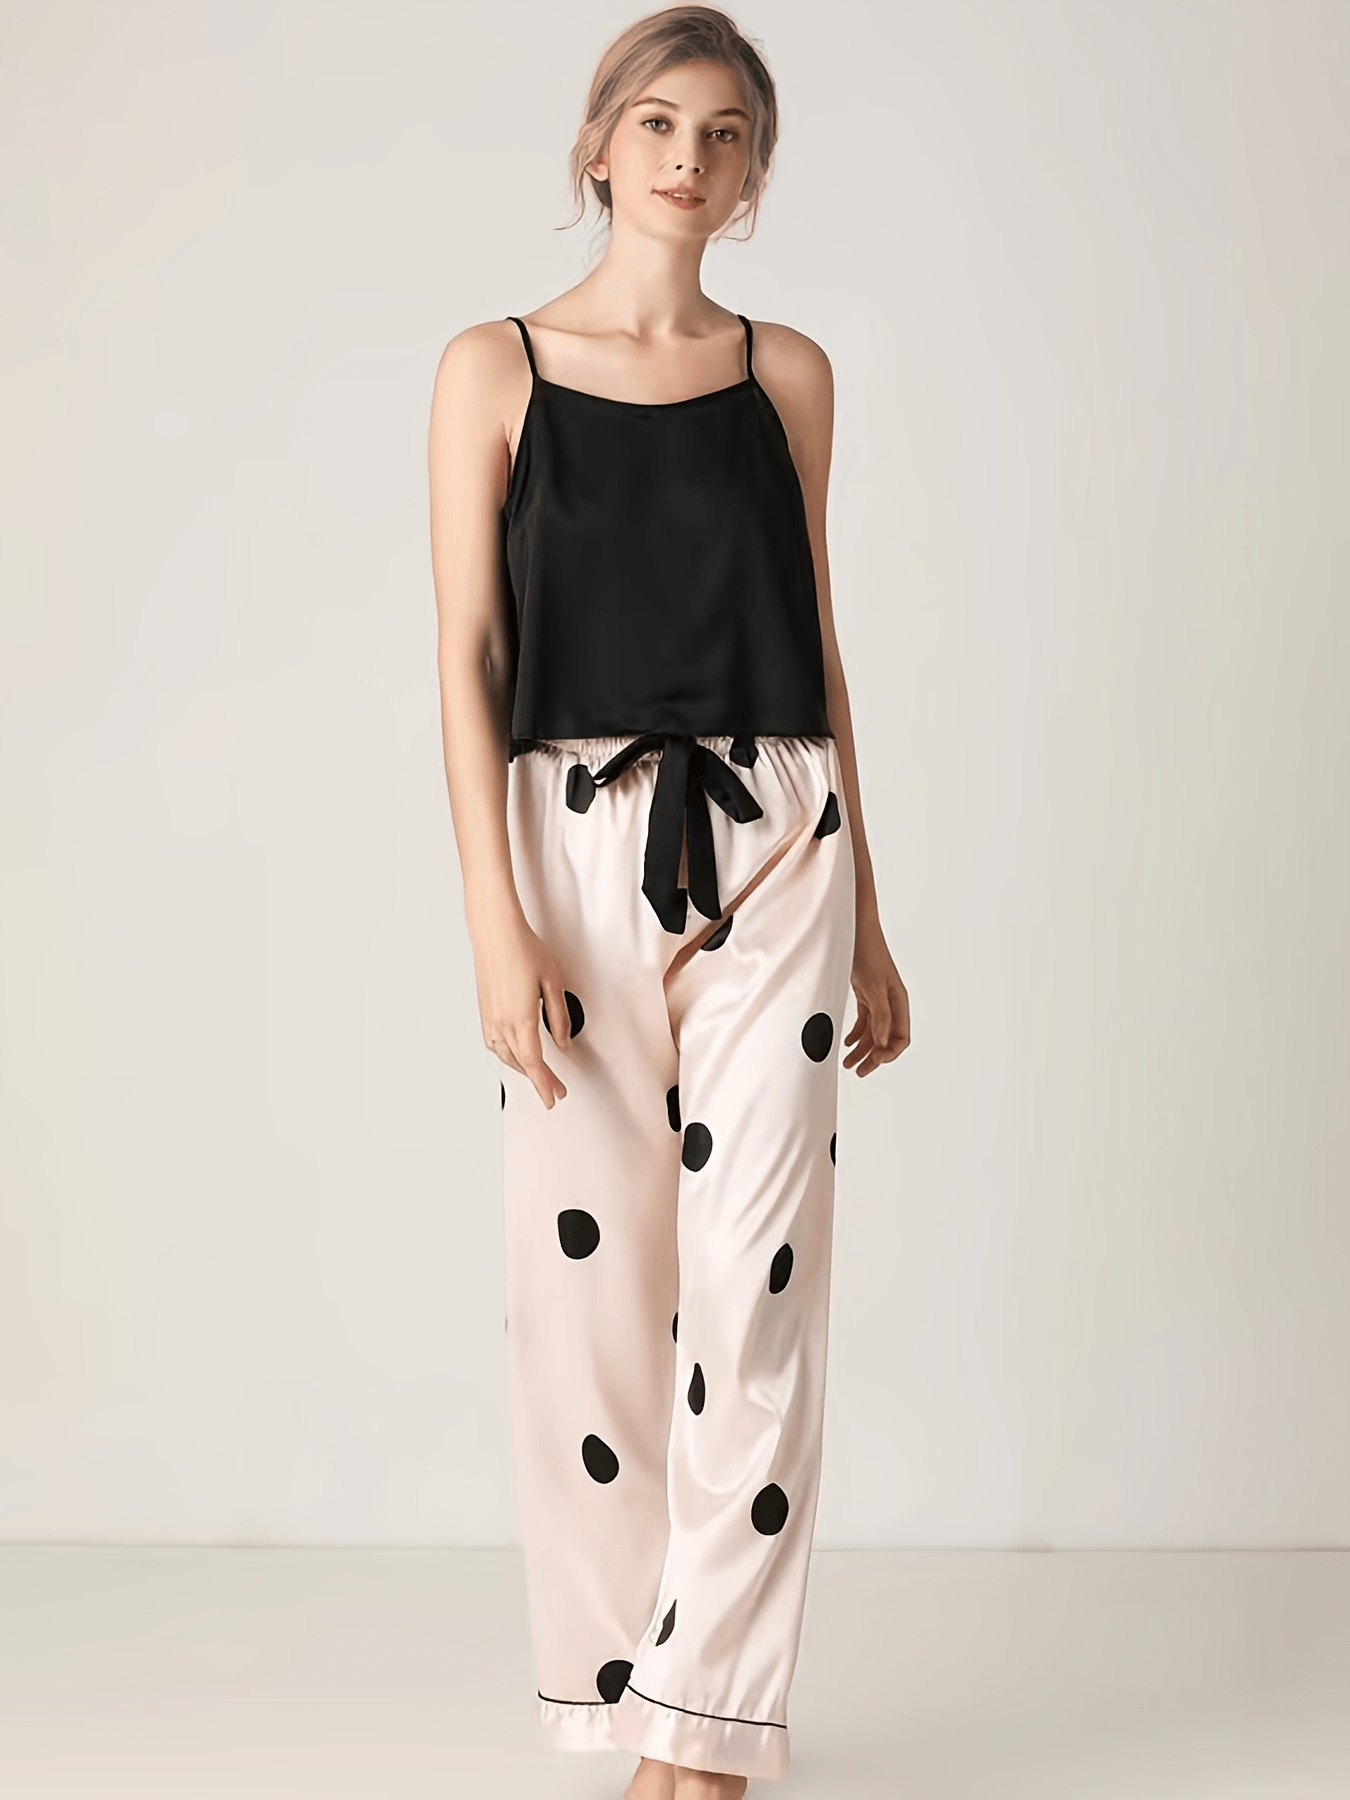 Women's Plus Size Satin Camisole Pajama Set #2067x (1X, Polka Dots) at   Women's Clothing store